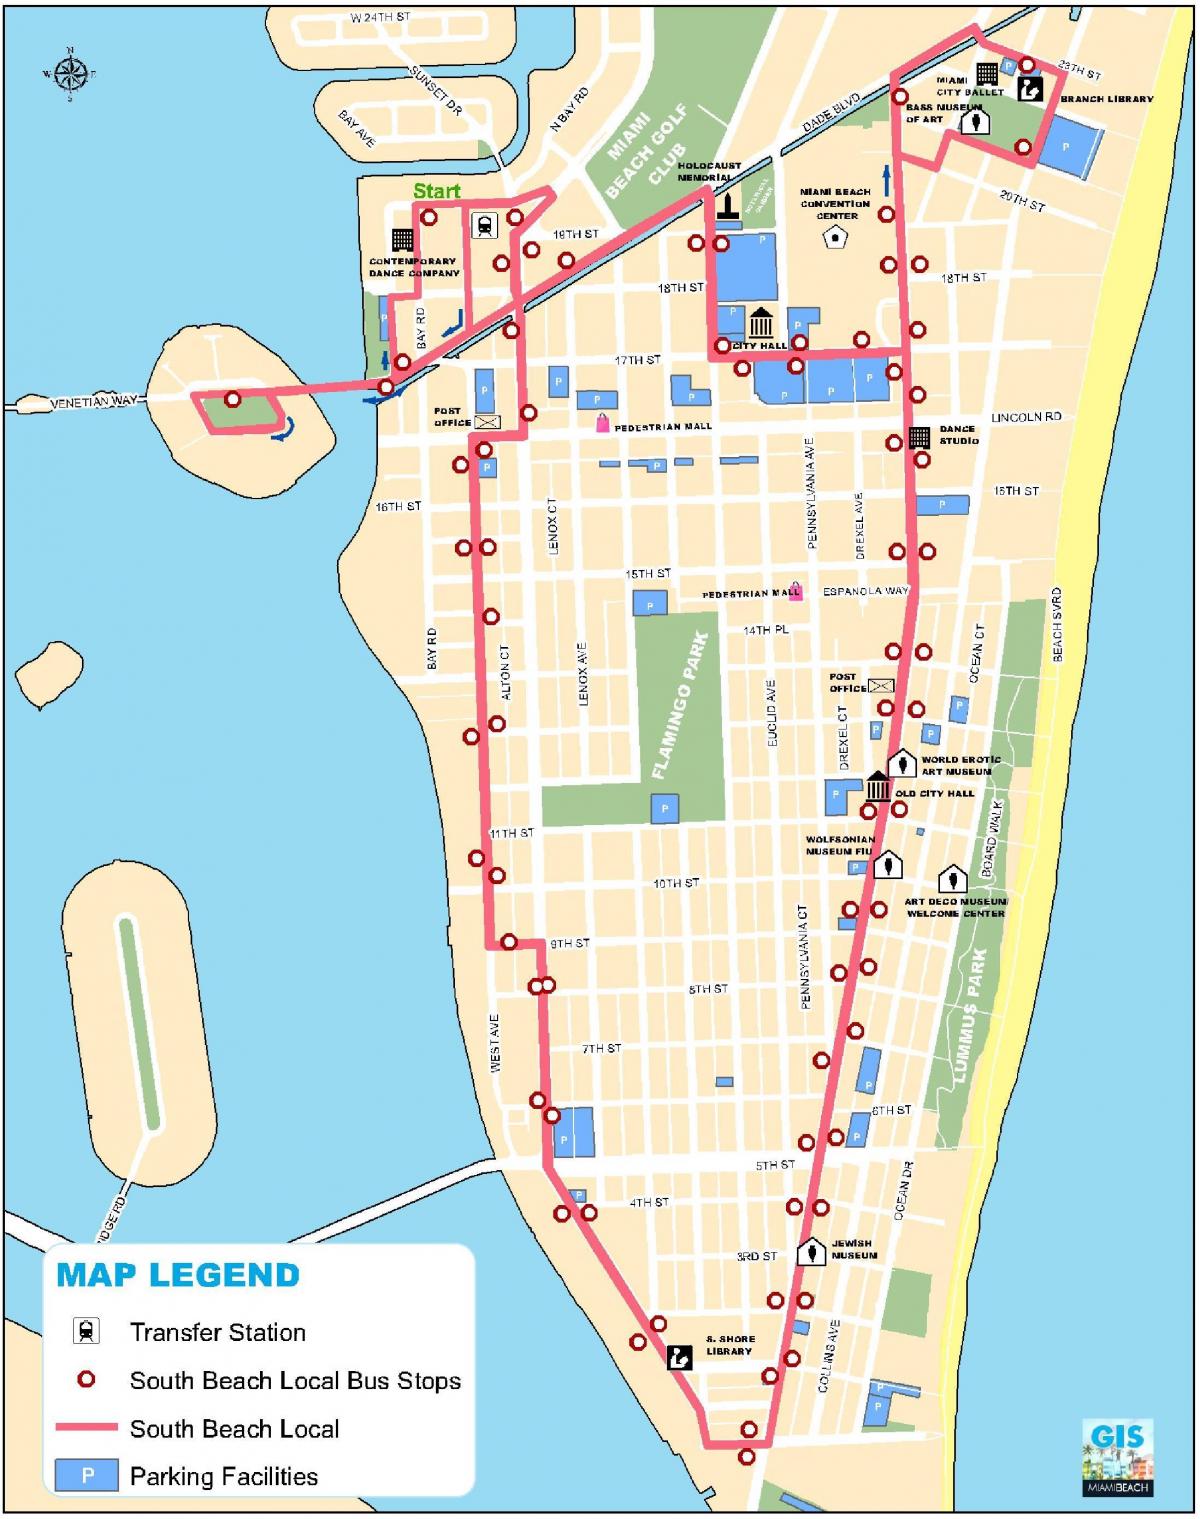 Karte von south beach Miami